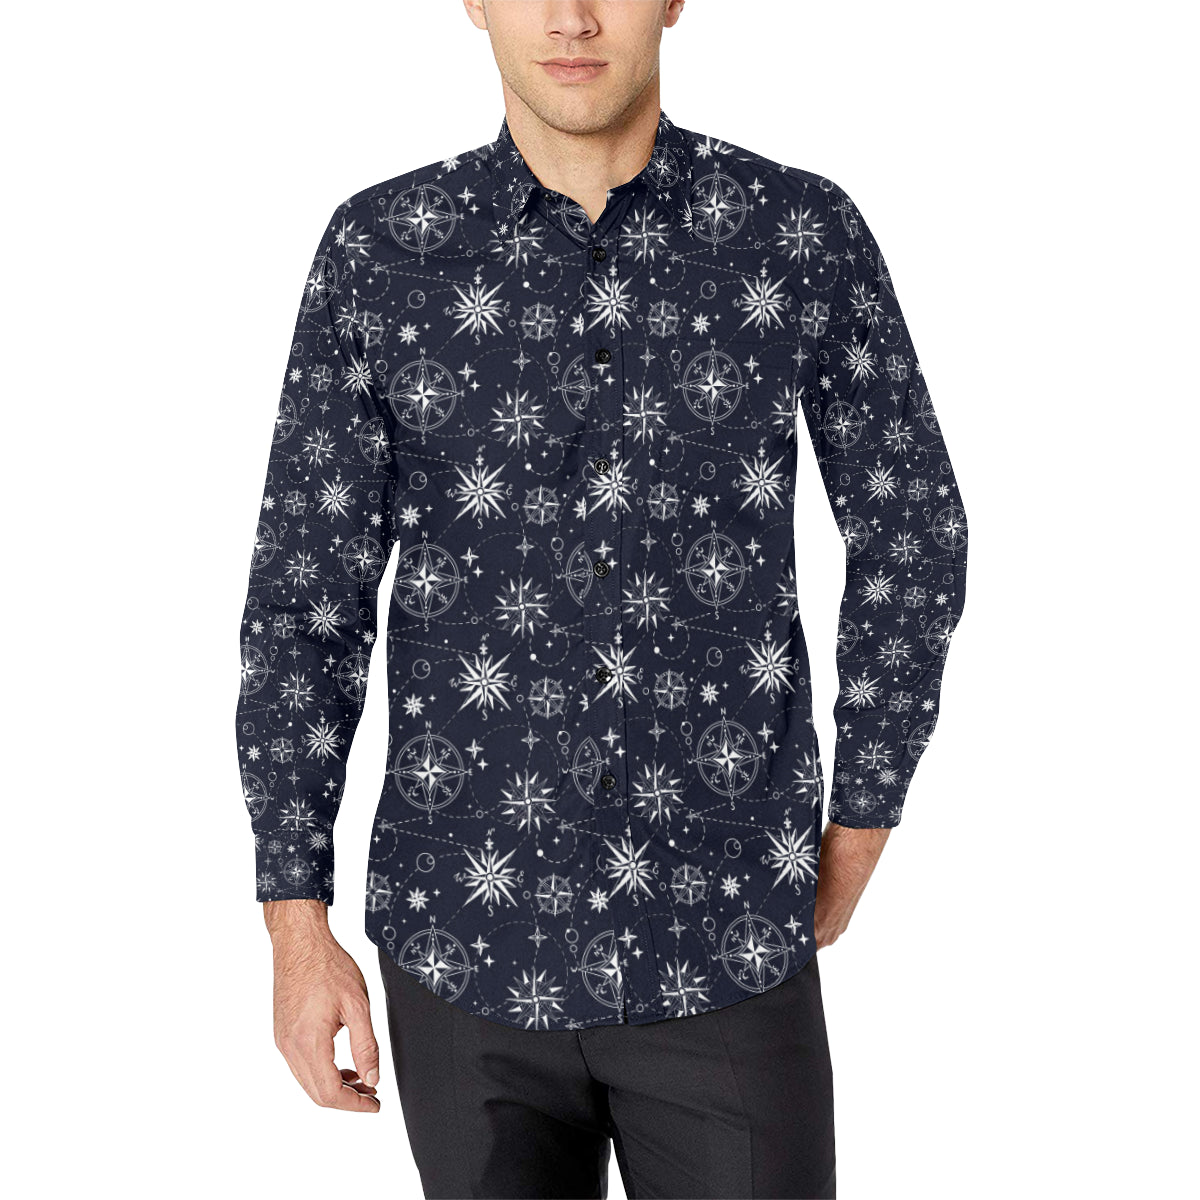 Nautical Sky Design Themed Print Men's Long Sleeve Shirt